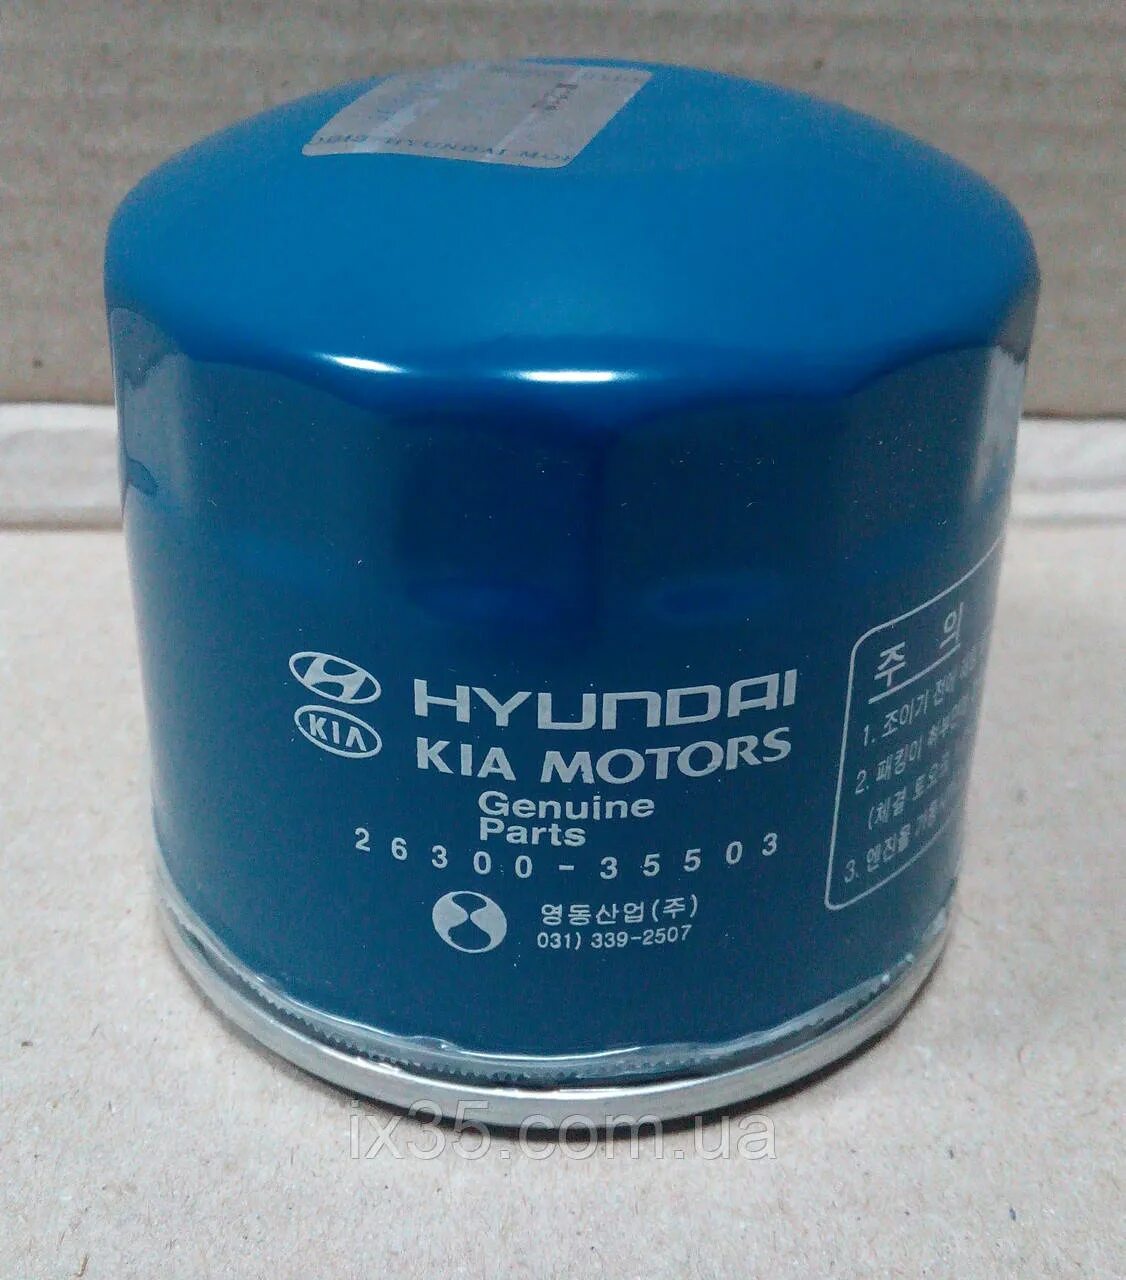 Hyundai/Kia 26300-35503. Масляный фильтр Хундай 1.4 2008 года. Фильтр масляный Церато 4 2.0 масляный Киа. Фильтр масляный Киа Церато 2. Фильтр киа сид 1.6